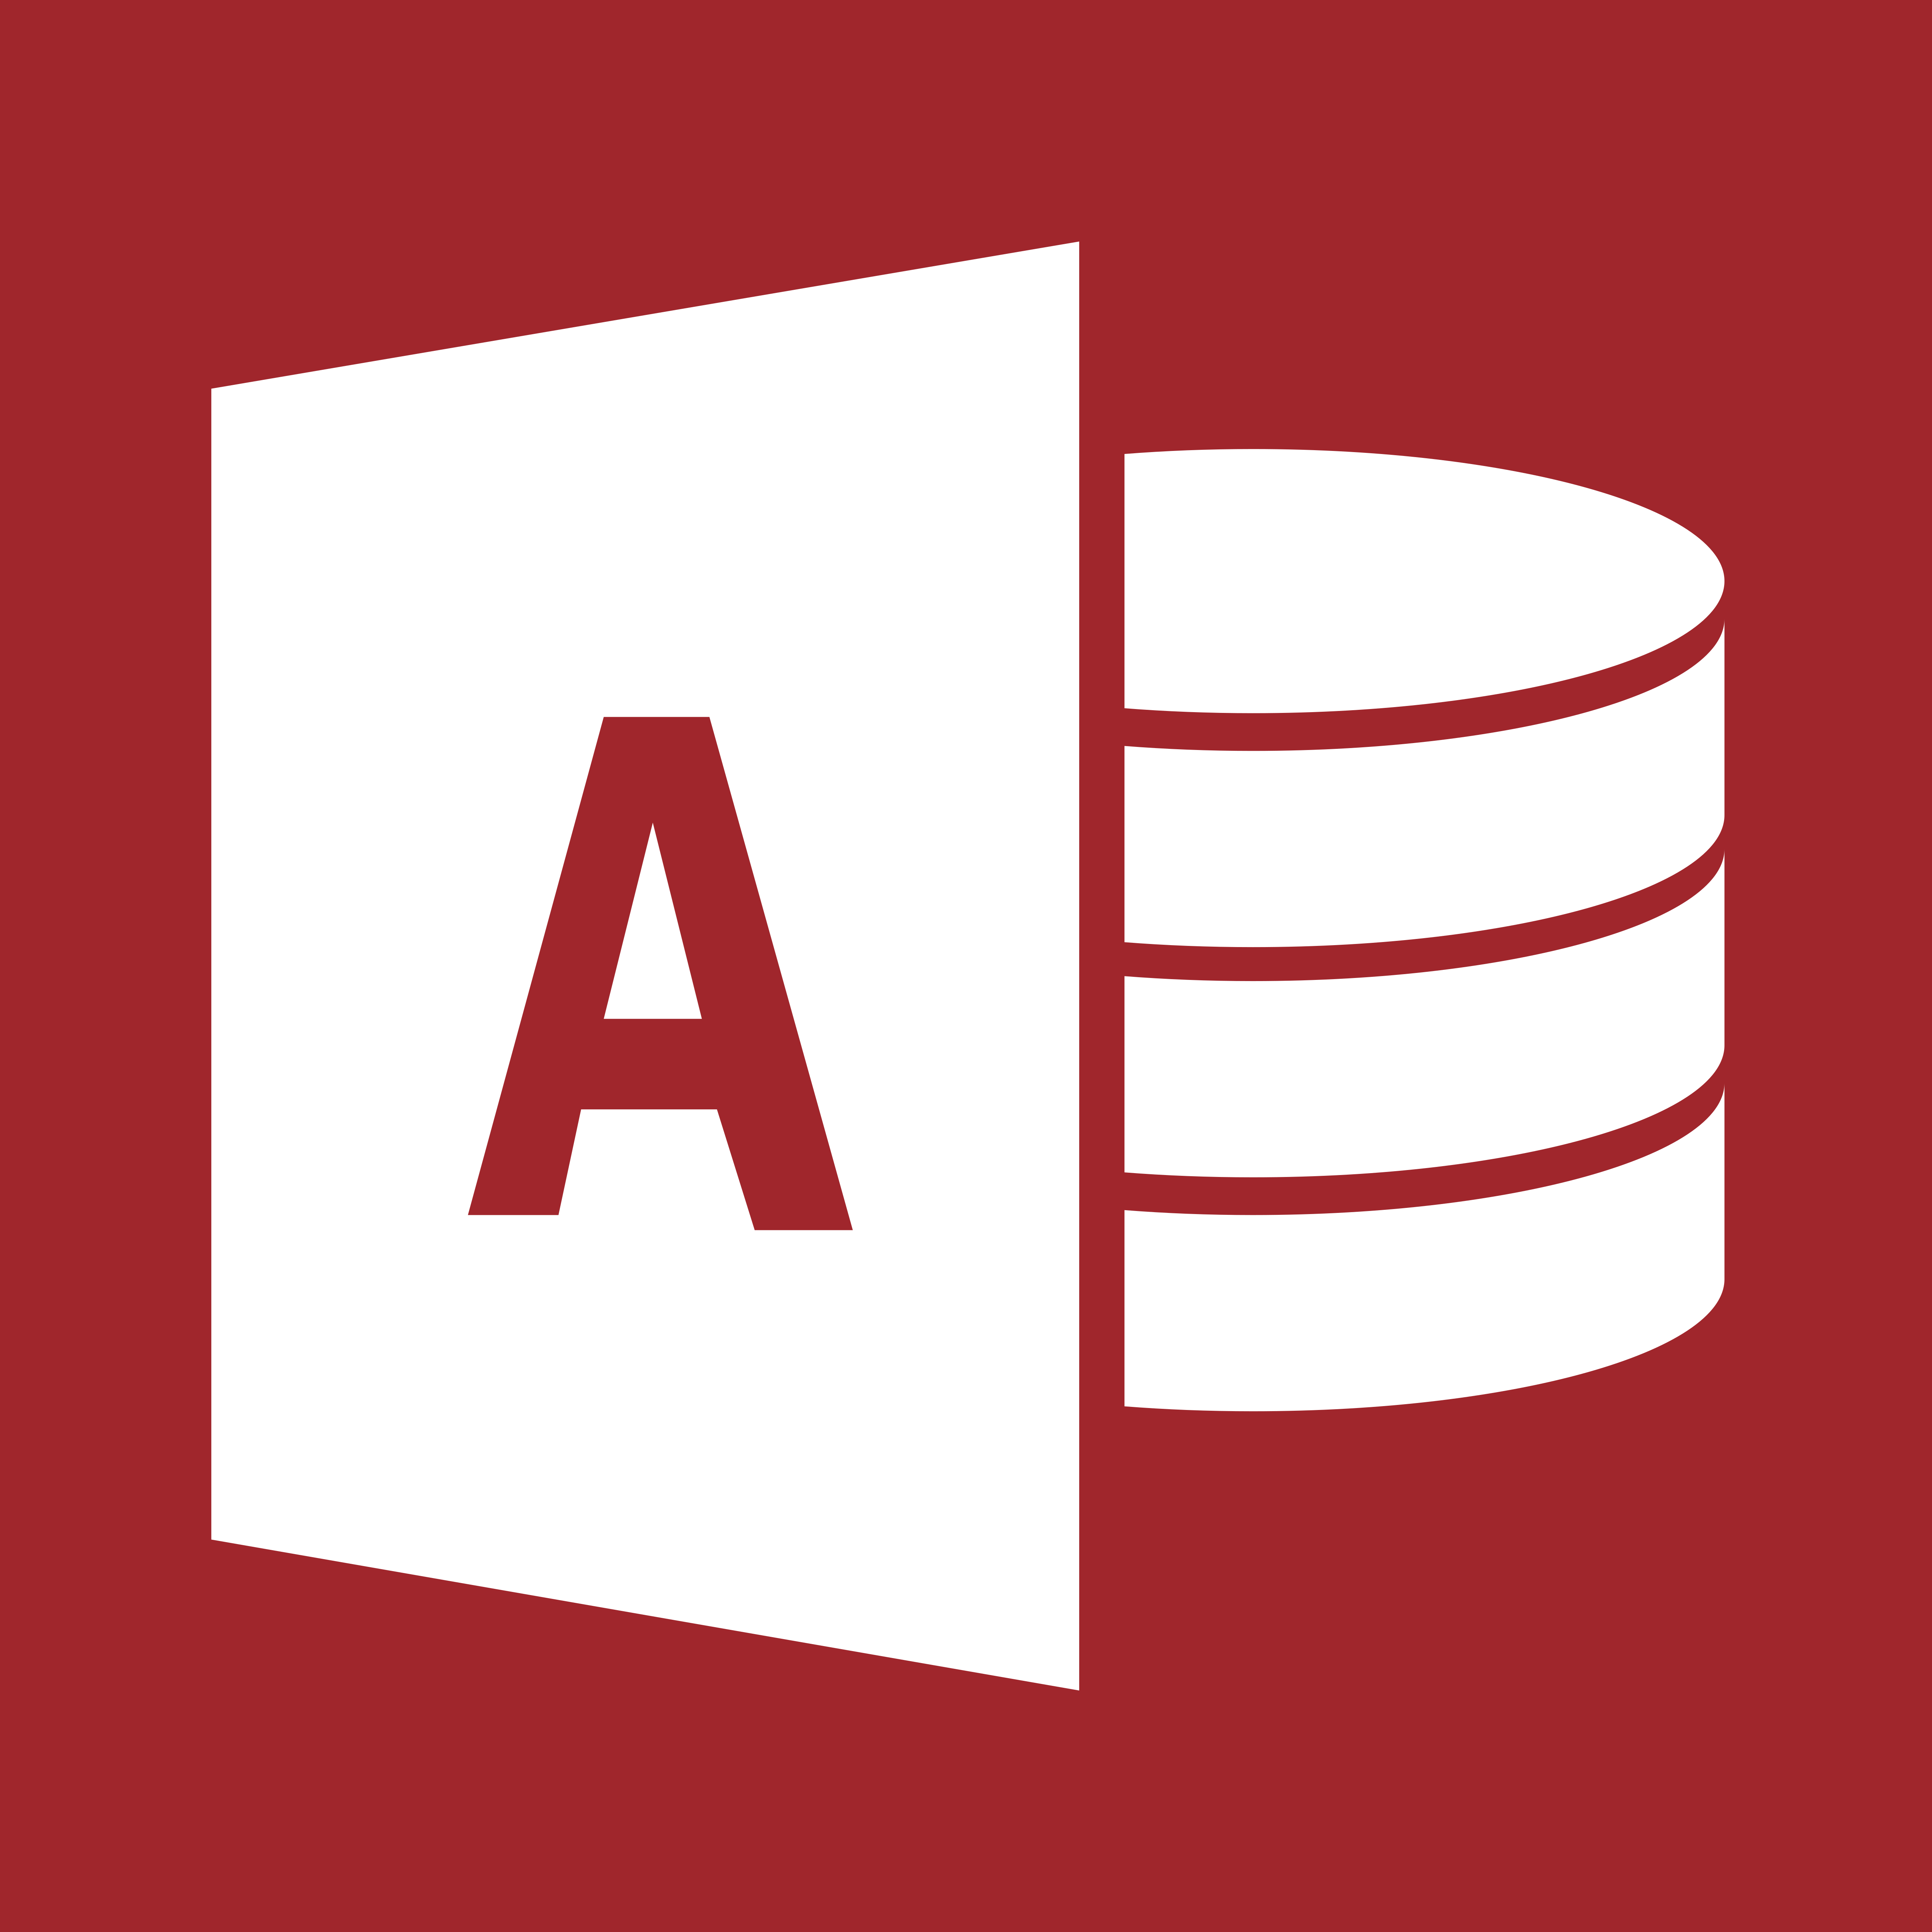 База данных access логотип. Иконка MS access. Microsoft access значок. СУБД Microsoft access 2016. Access 2022